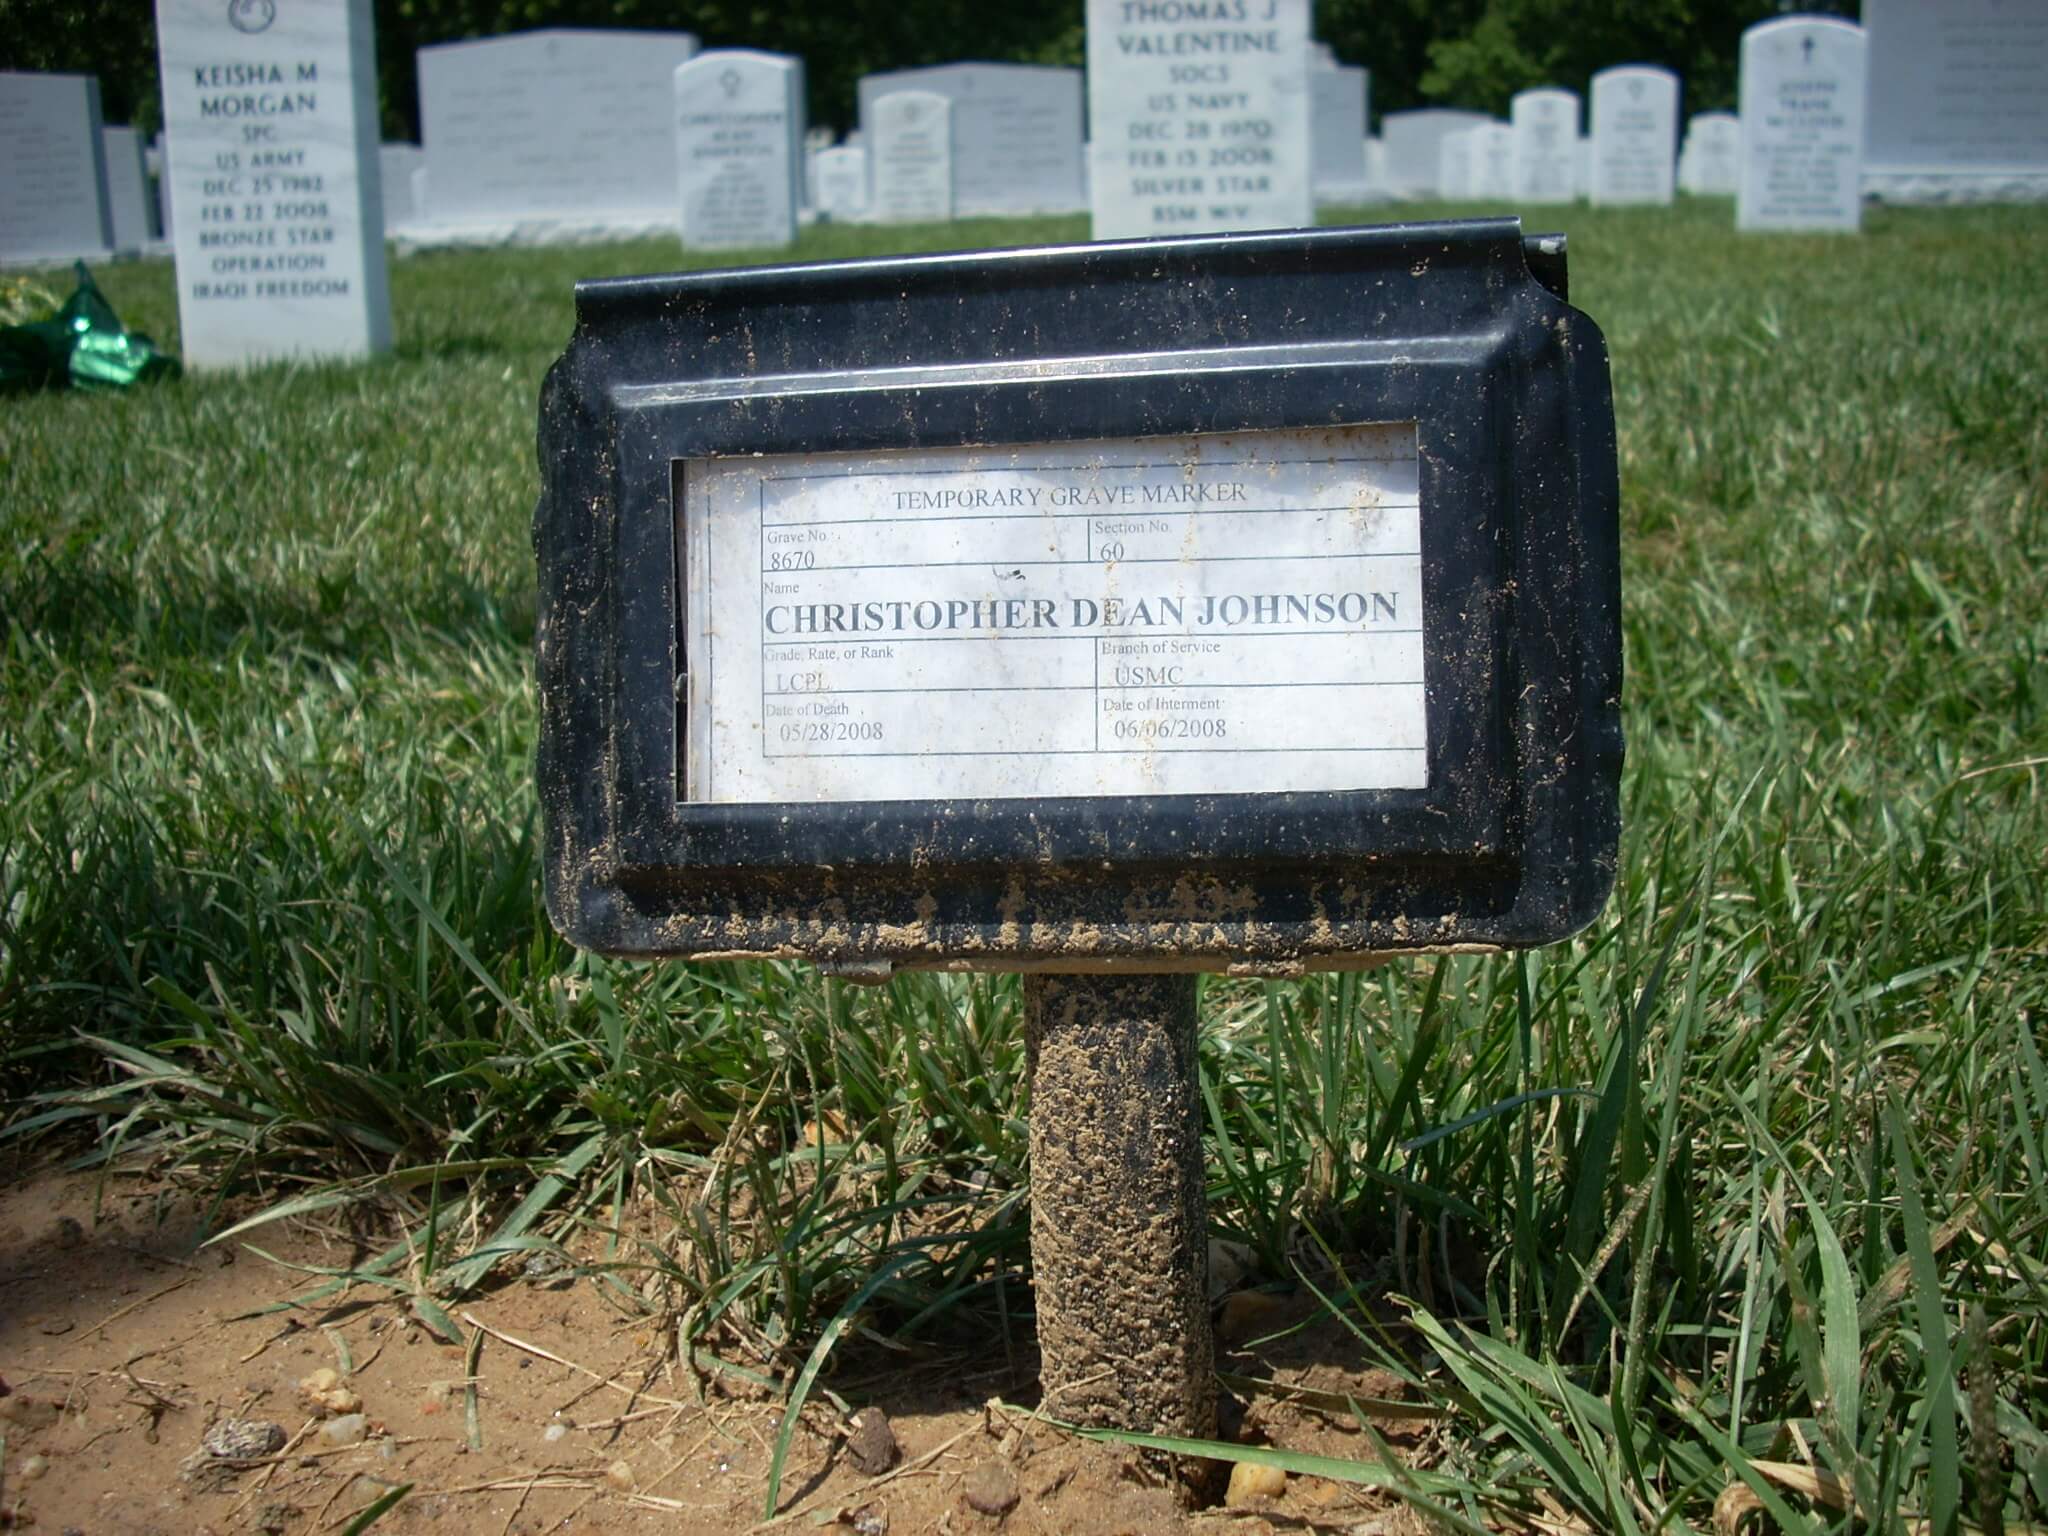 cdjohnson-gravesite-photo-july-2008-001